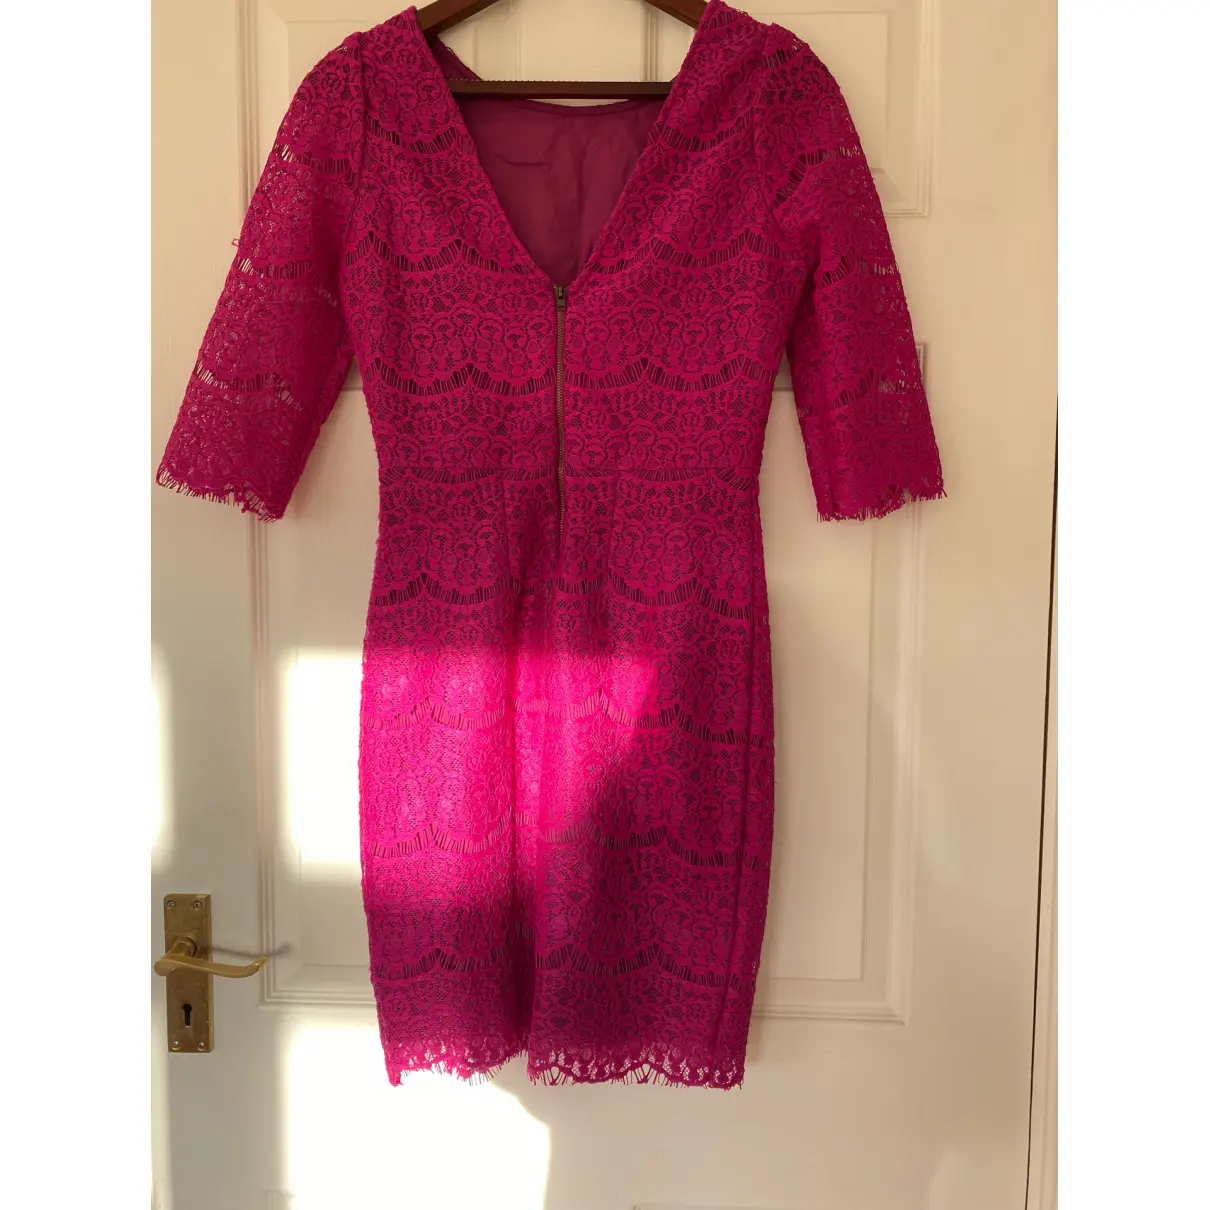 Buy Darling Lace mini dress online